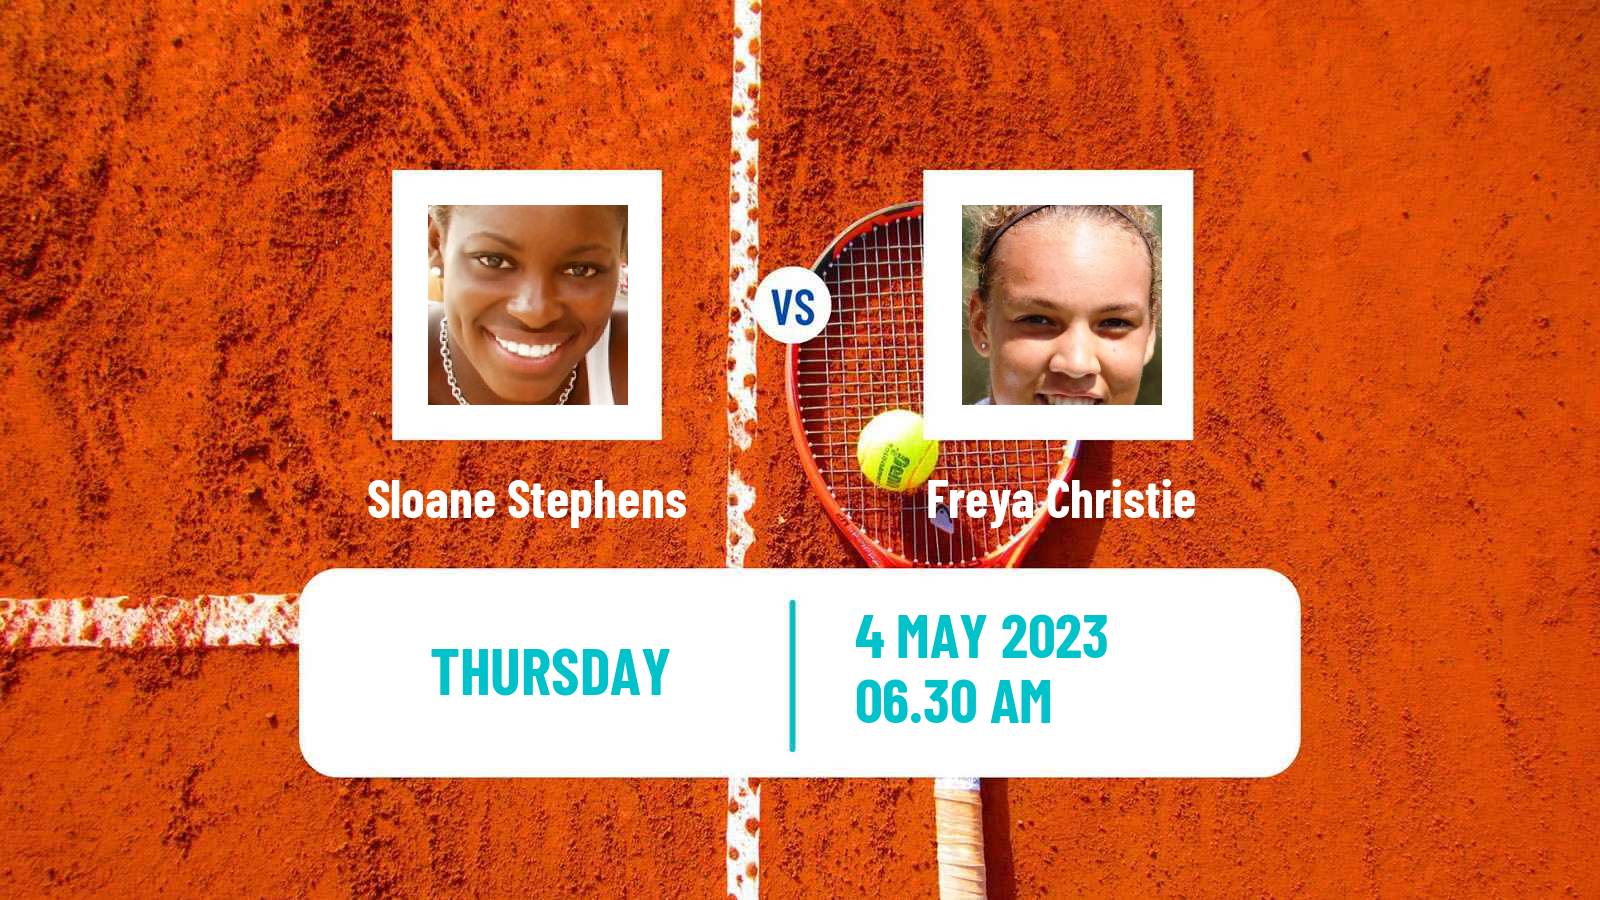 Tennis ATP Challenger Sloane Stephens - Freya Christie